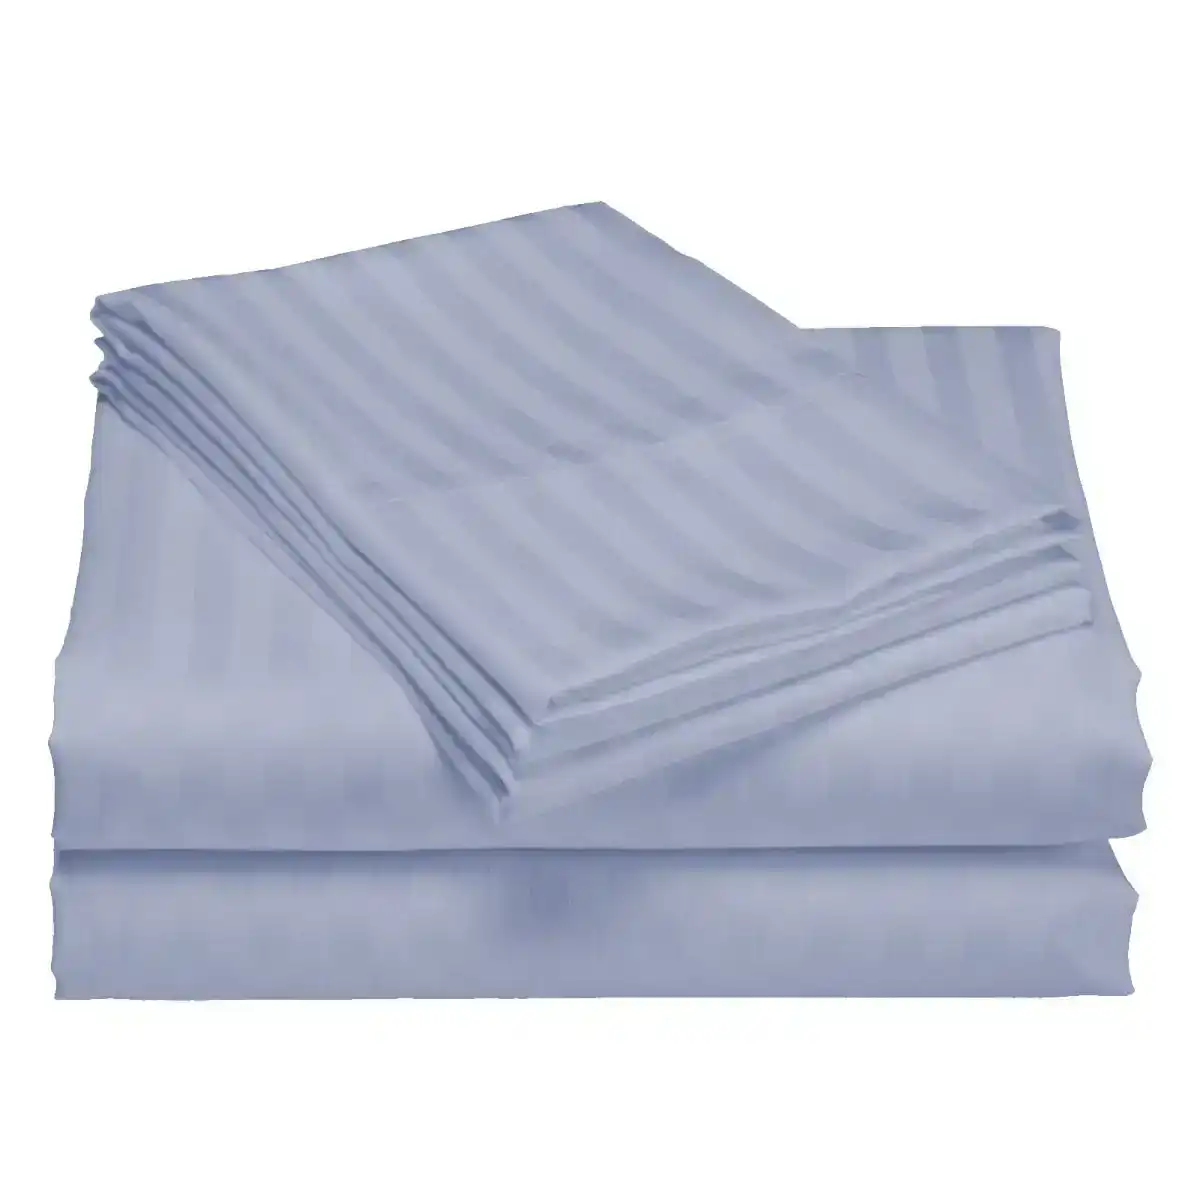 Royal Comfort 1200Tc Quilt Cover Set Damask Cotton Blend Luxury Sateen Bedding - King Blue Fog - One Size